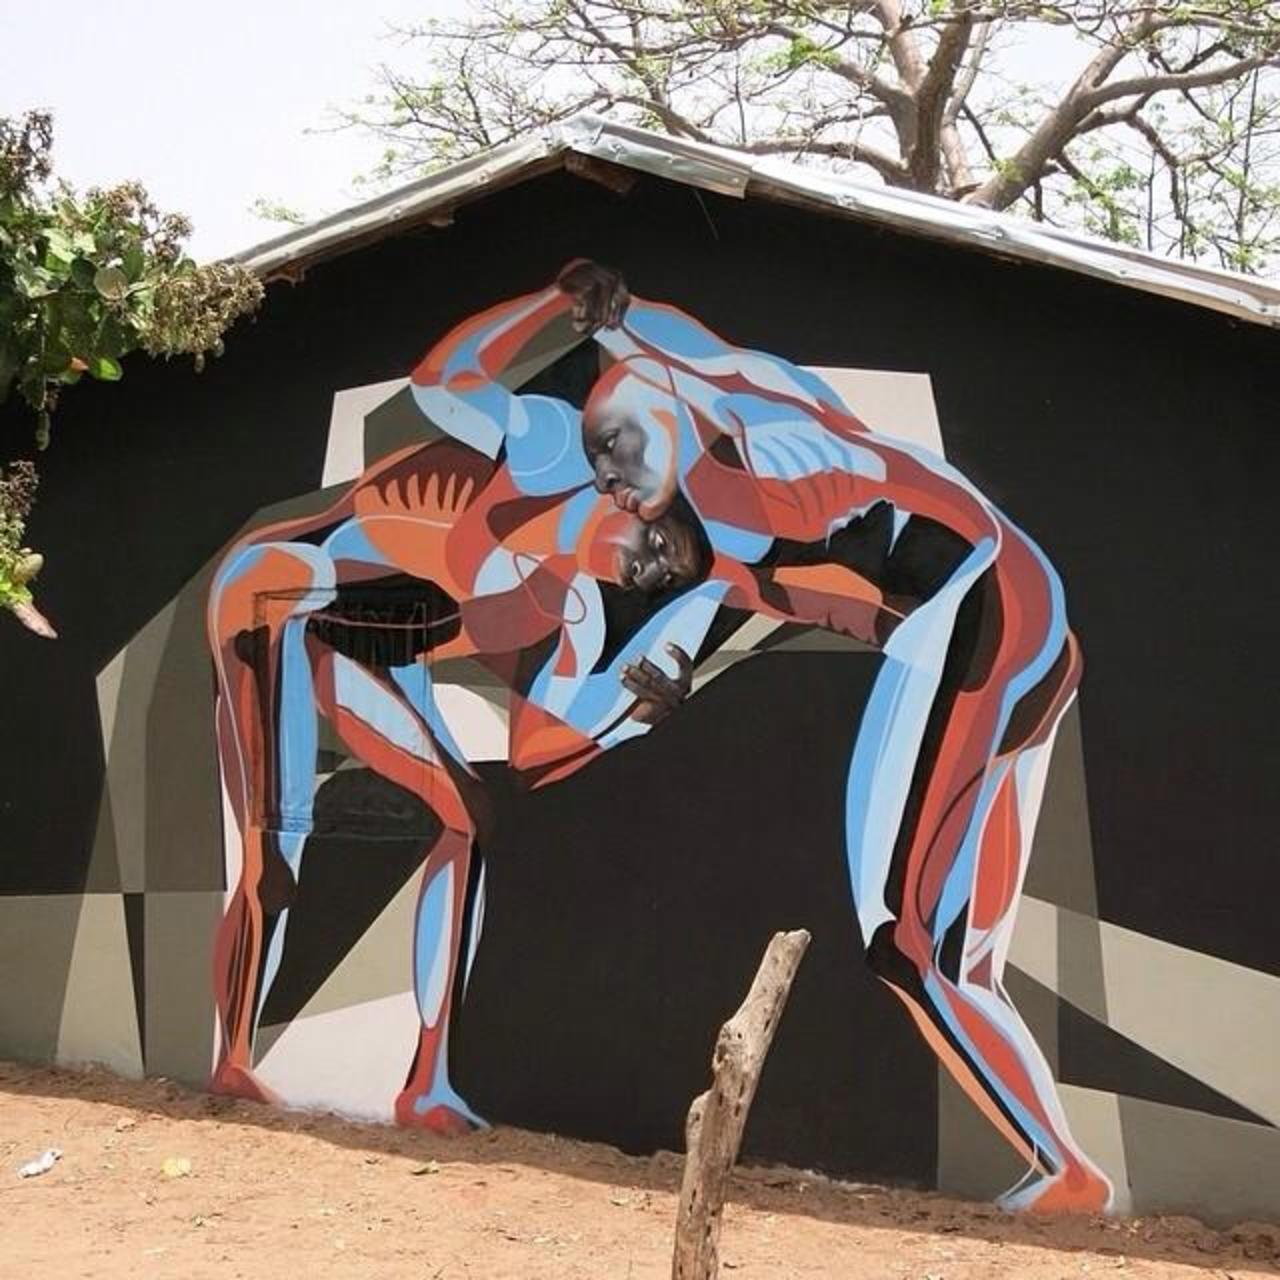 Artist 'Best Ever' new Street Art for the wide open walls in Galoya, The Gambia #art #graffiti #mural #streetart http://t.co/s8wPJVr1rD